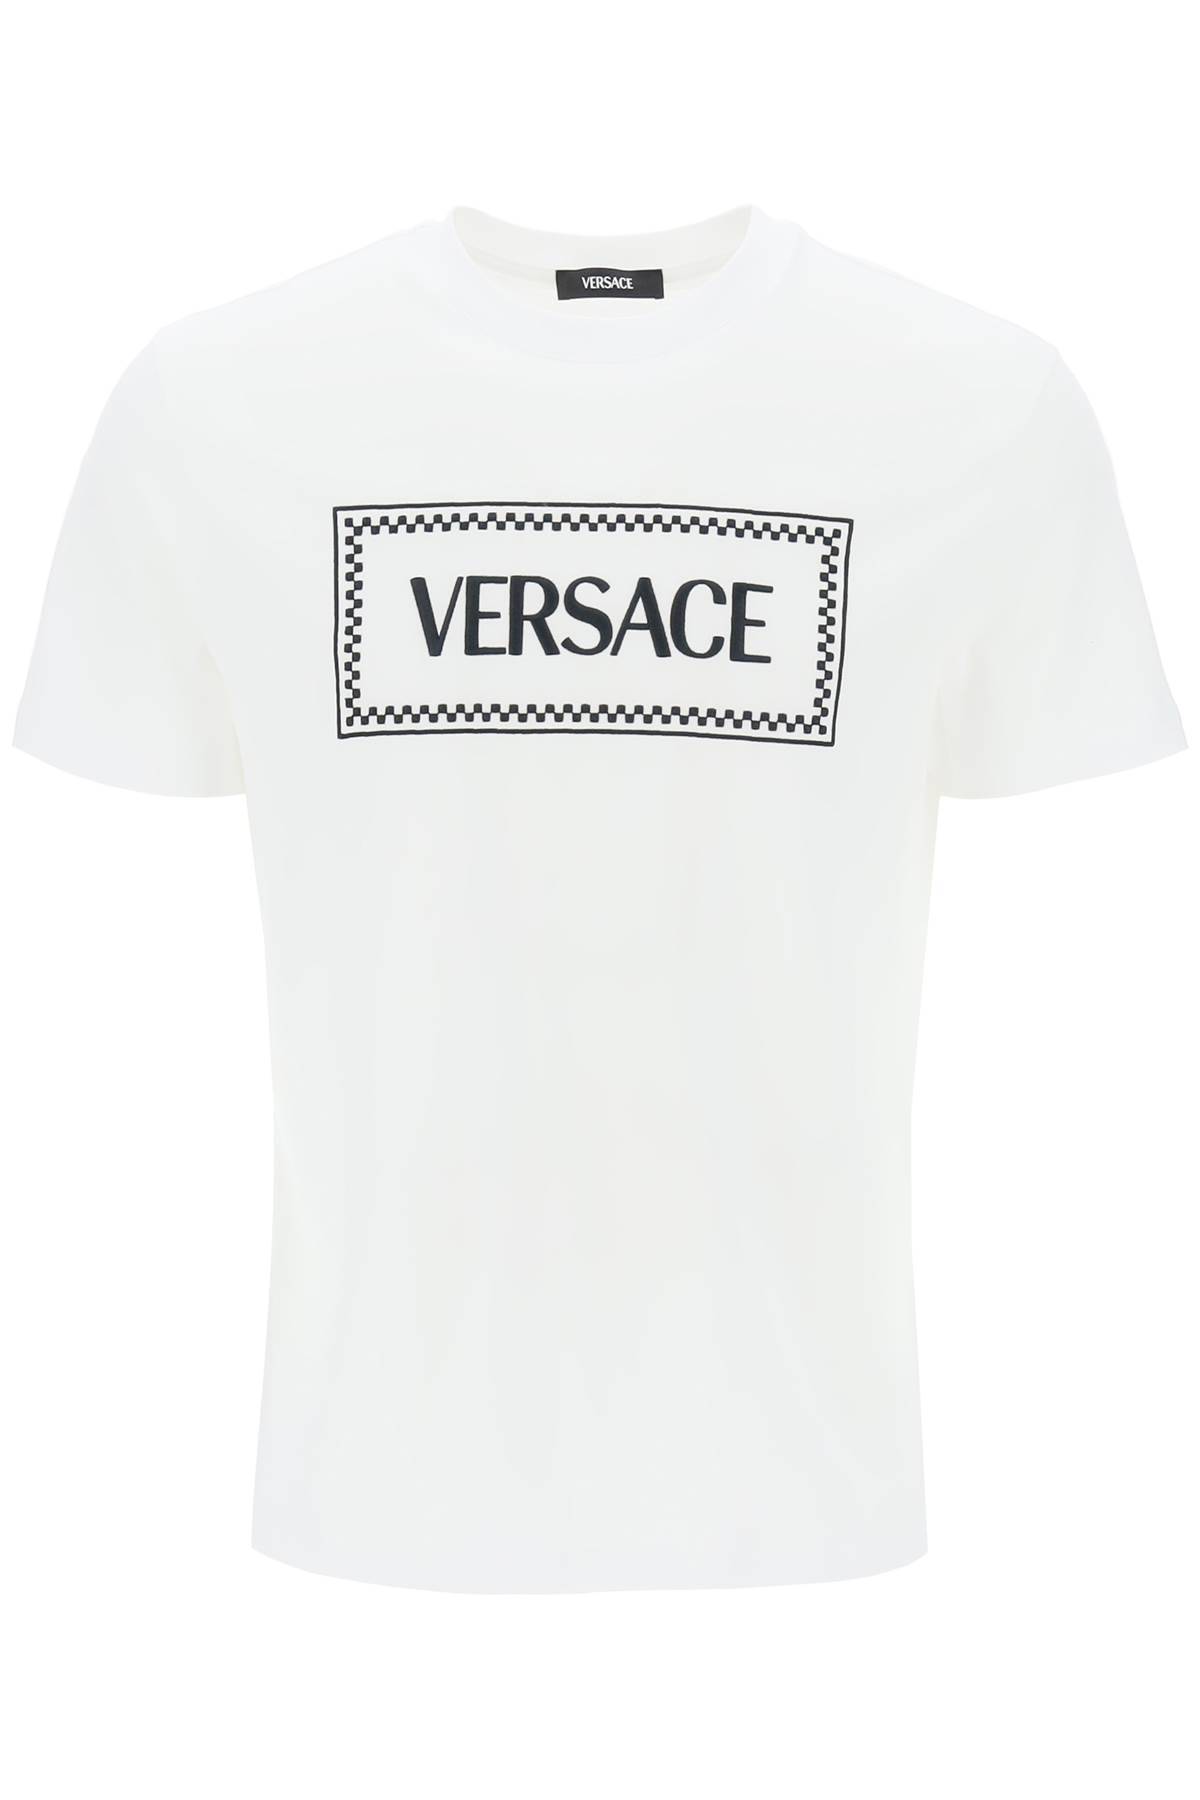 Versace VERSACE embroidered logo t-shirt